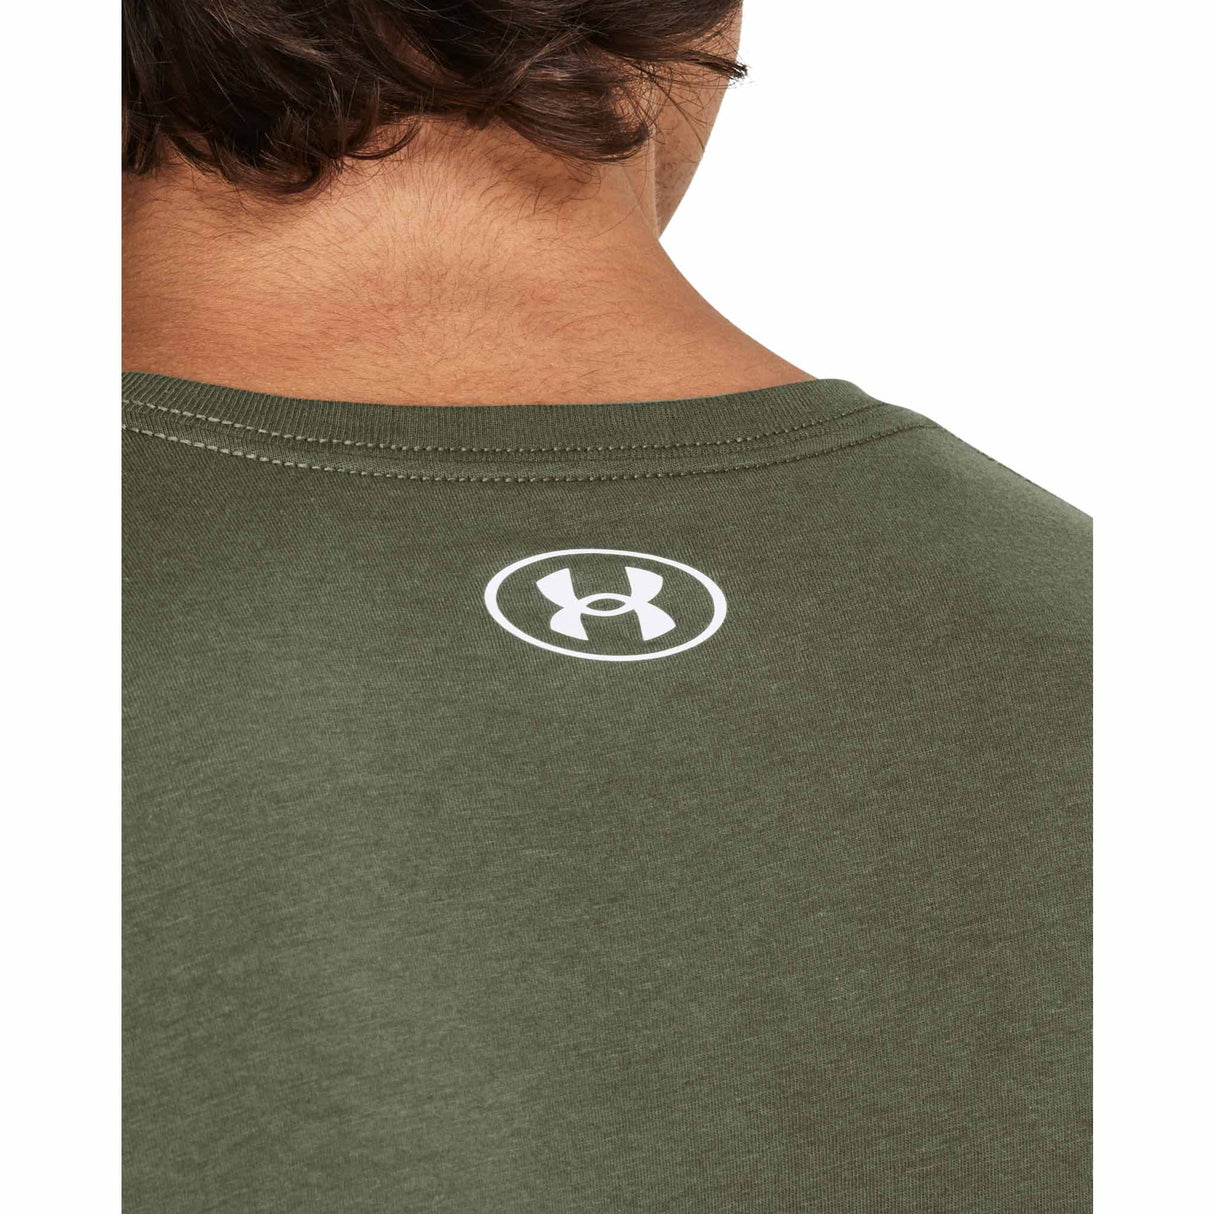 Under Armour Camo t-shirt à manches courtes homme logo - Marine OD Green / Black / White